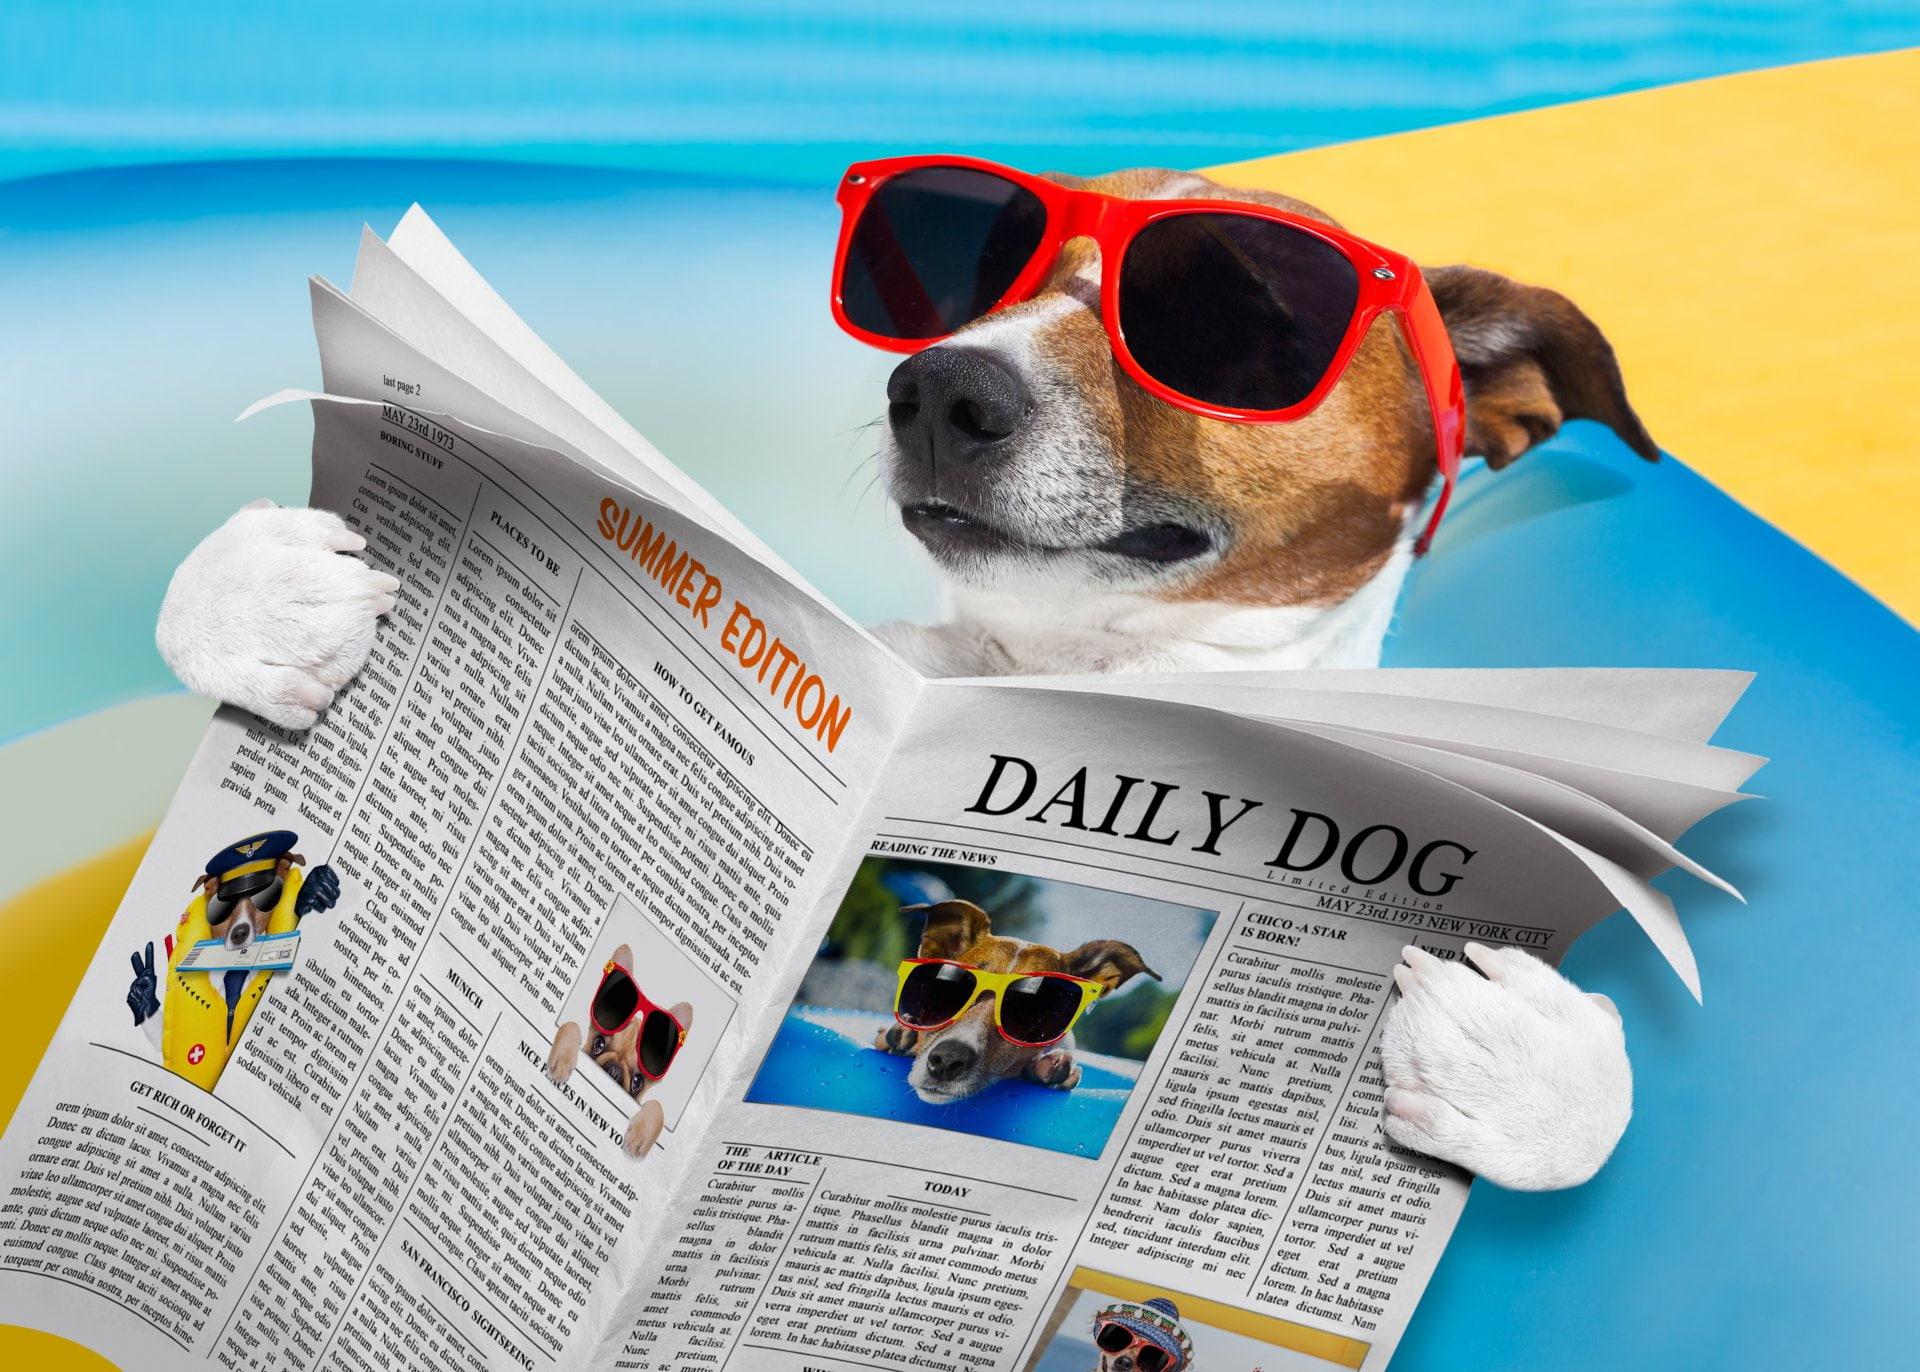 Dog Sunglasses Wallpapers - Wallpaper Cave